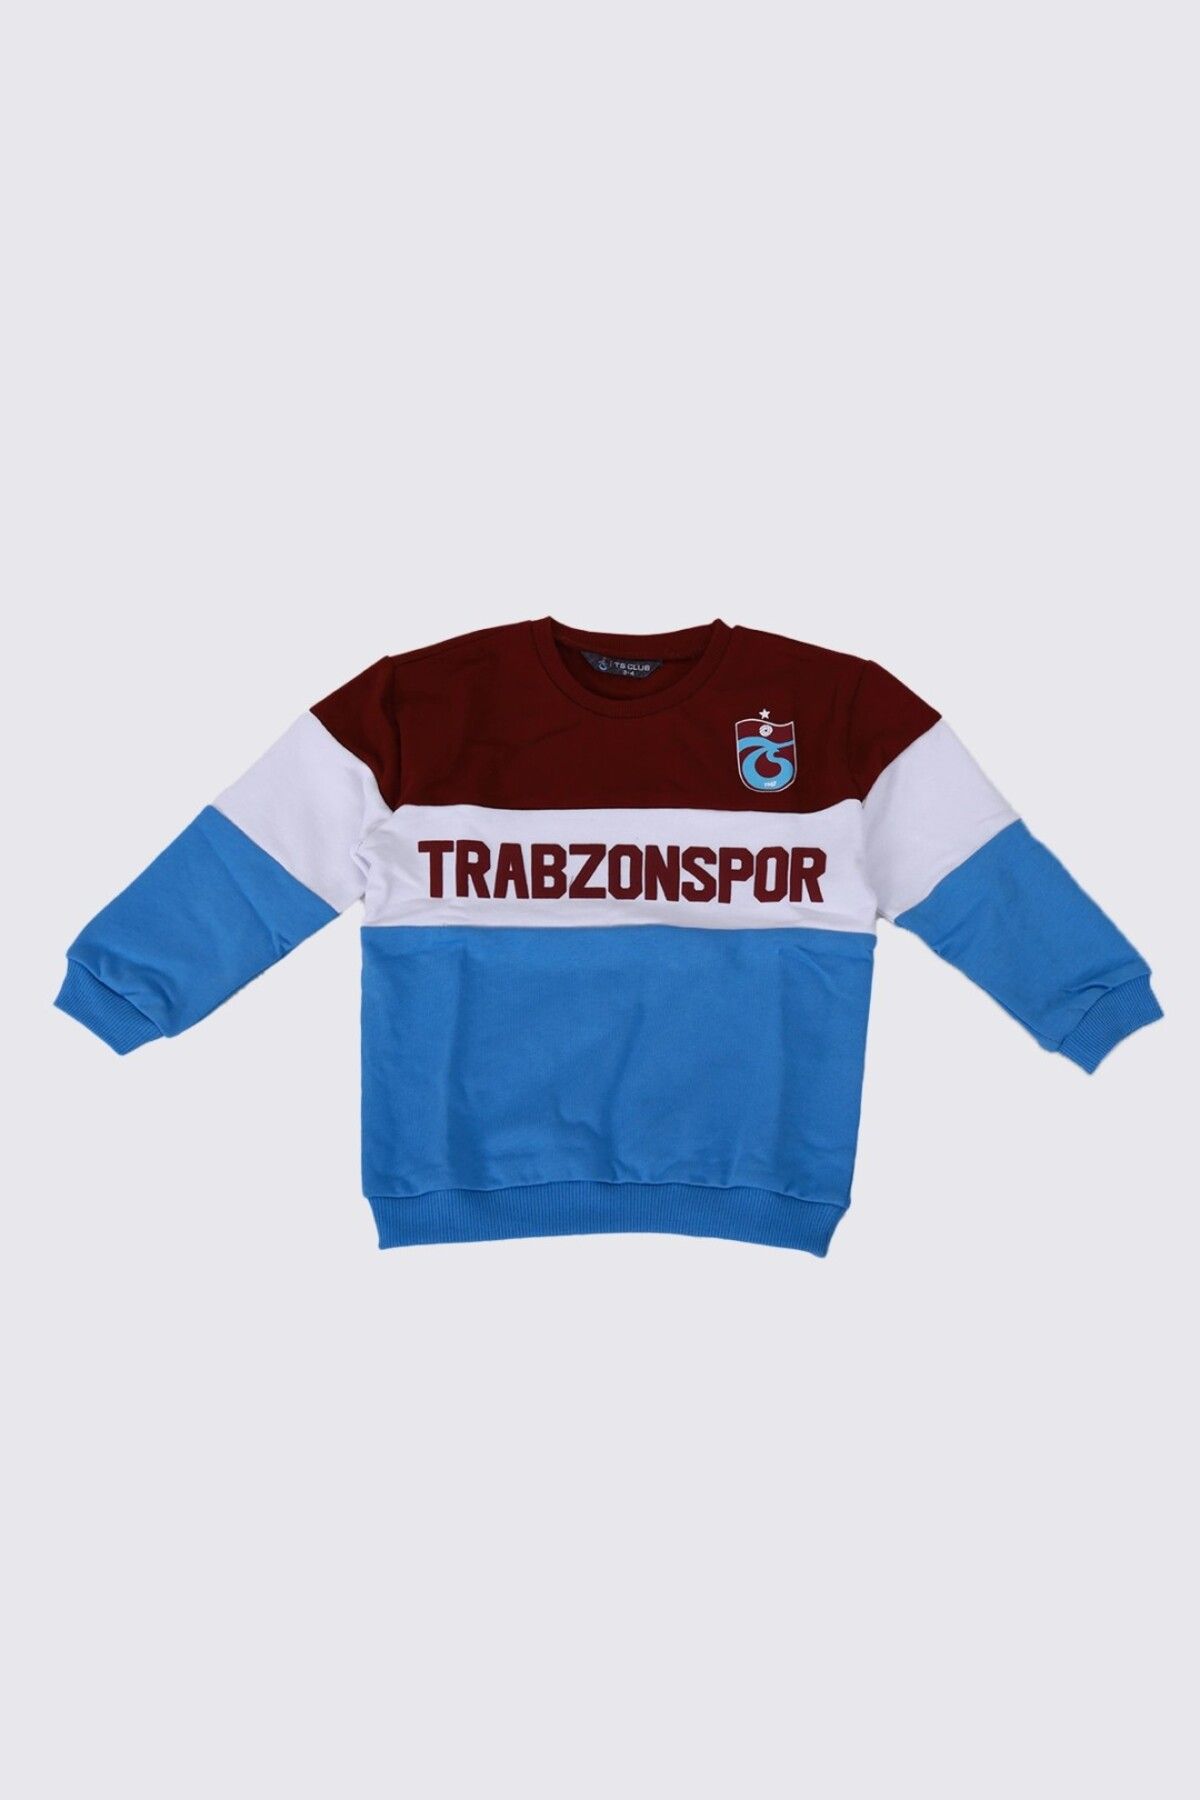 Trabzonspor SWEAT TRAB-3 3W